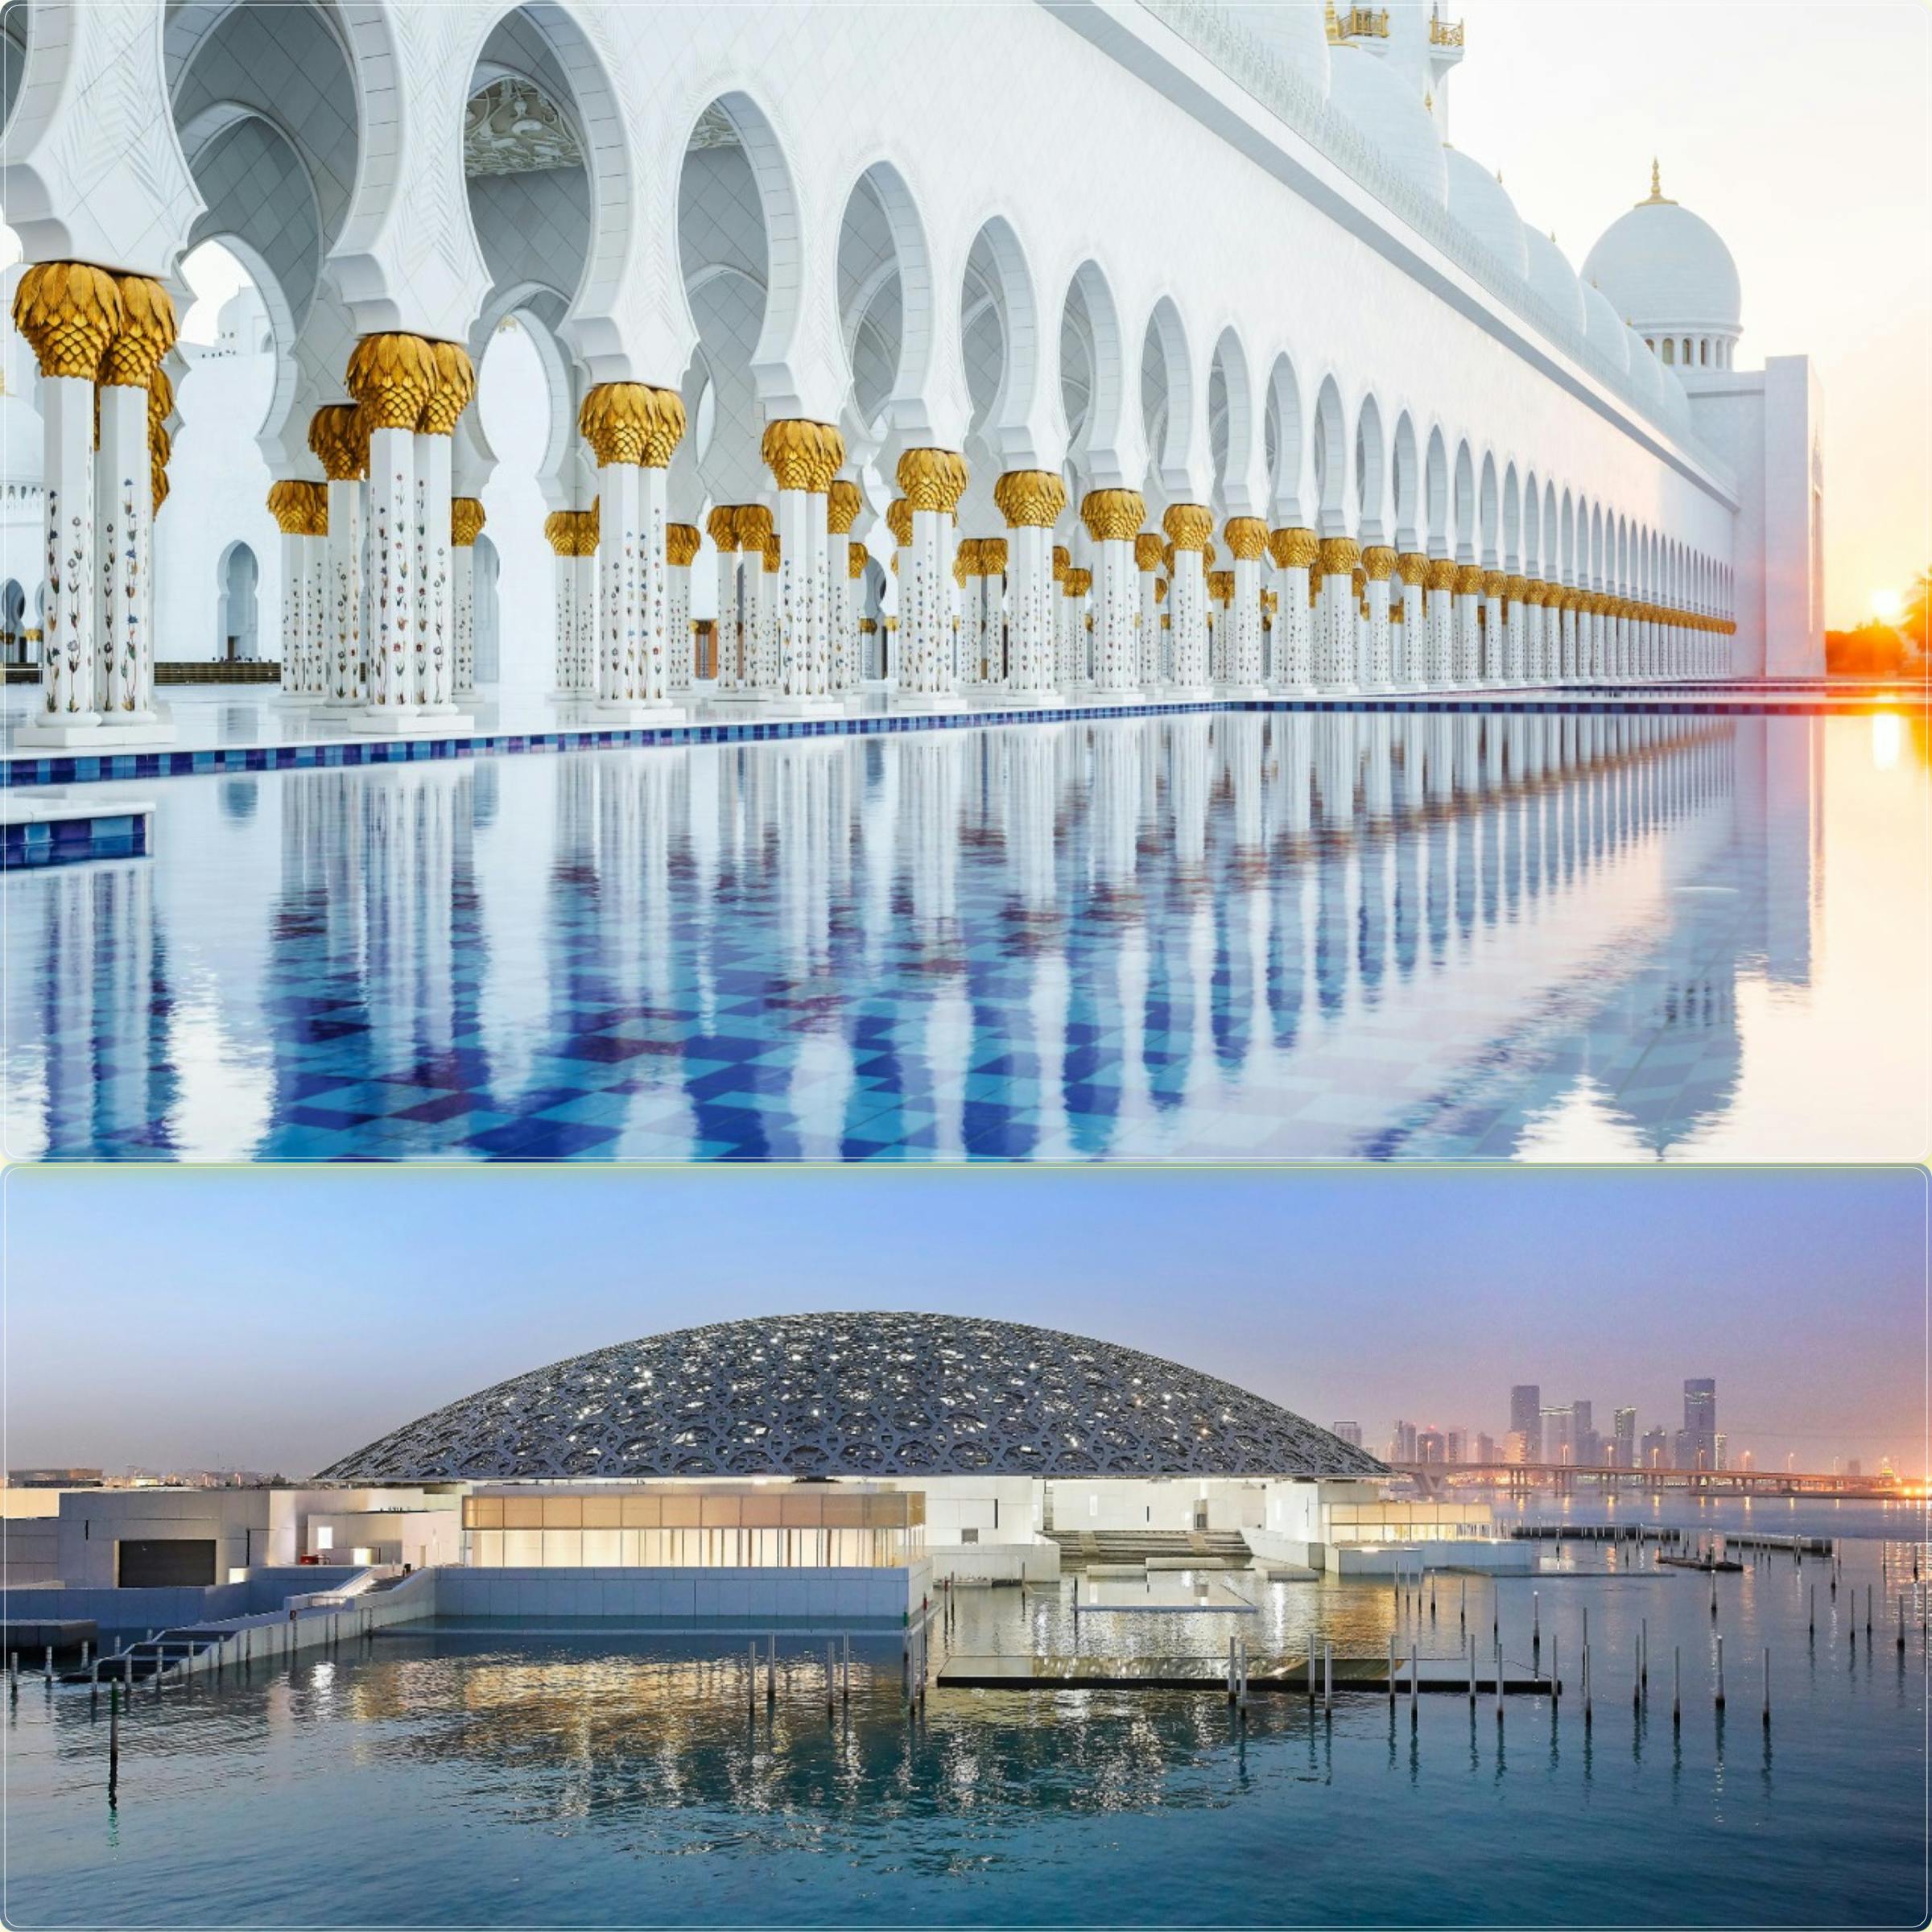 Abu Dhabi Louvre Museum en Sheikh Zayed Grand Mosque dagtrip vanuit Dubai